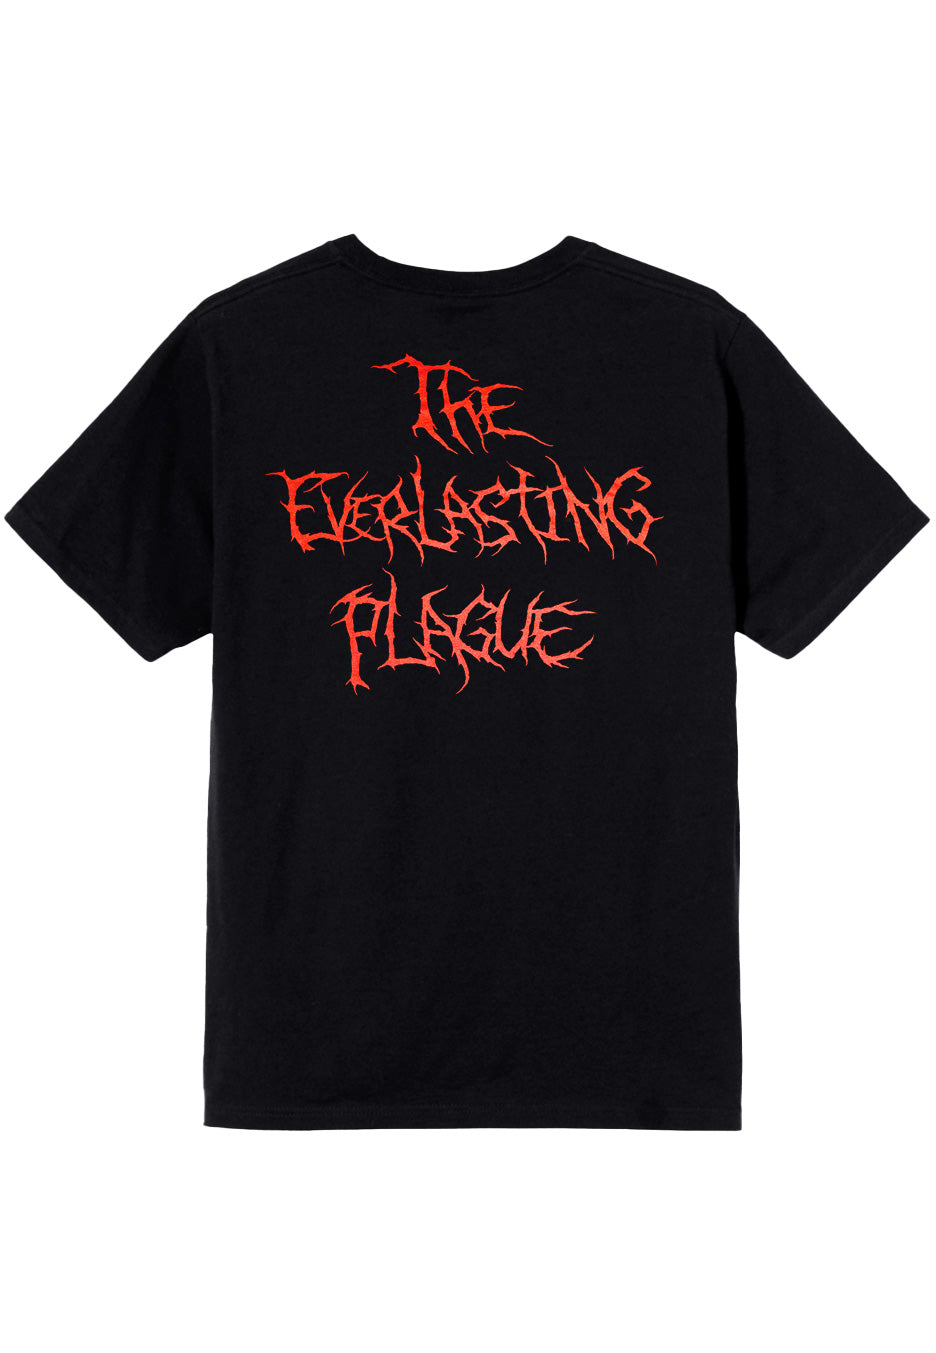 Pathology - Everlasting Plague - T-Shirt